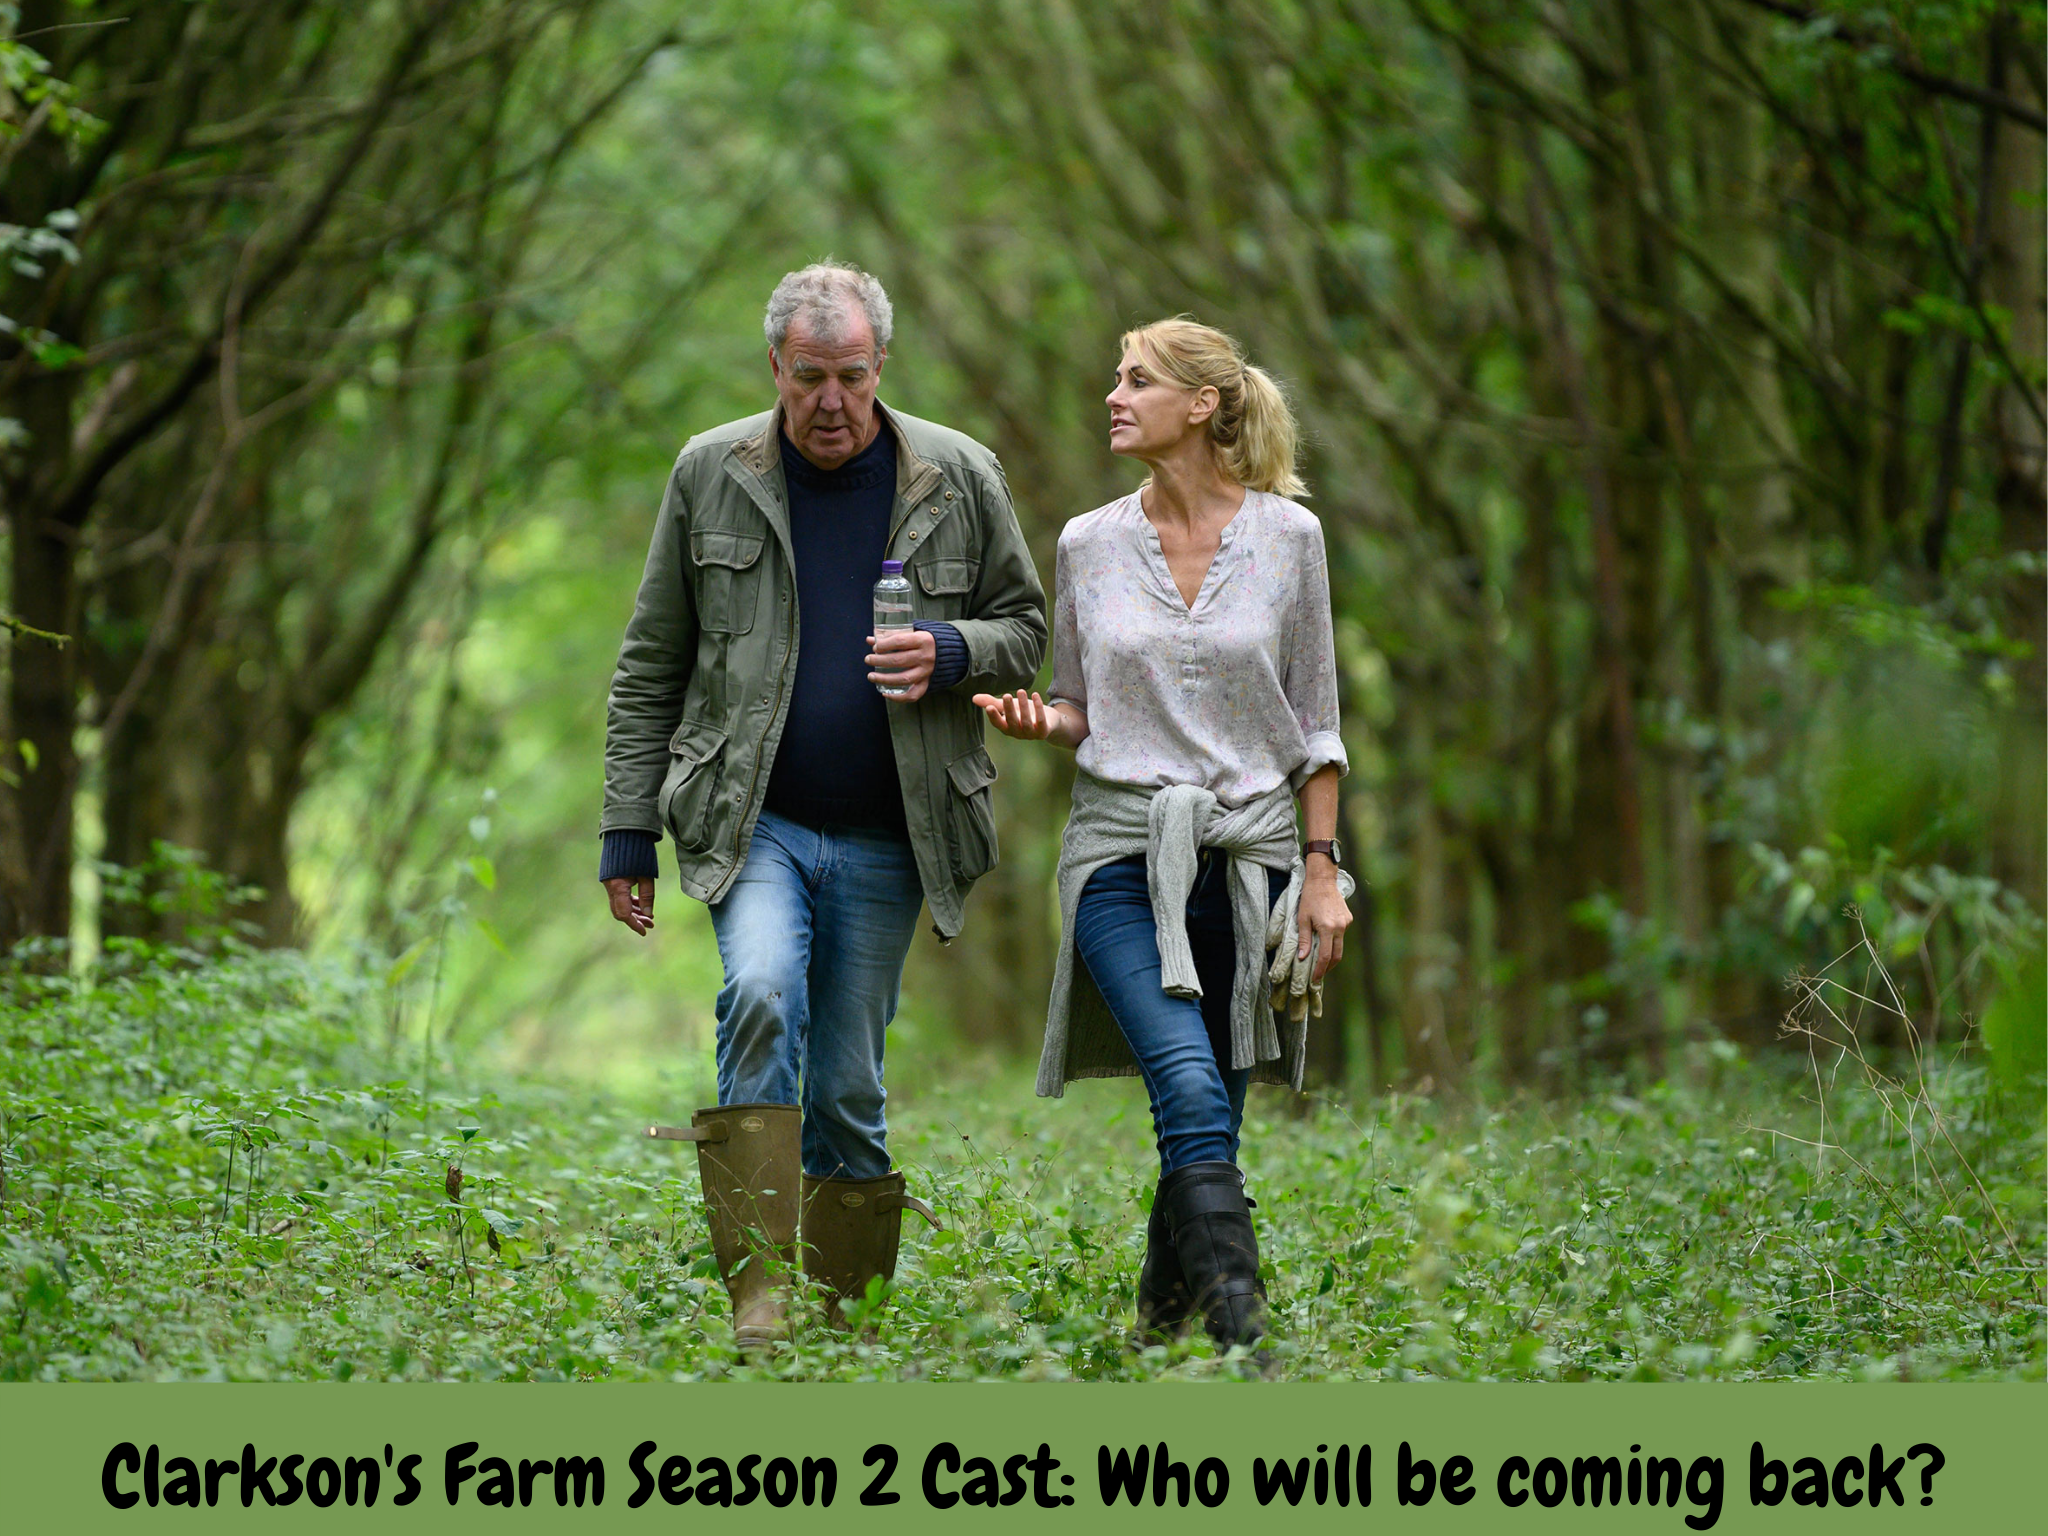 Clarkson's Farm Season 2 Cast: Who will be coming back?